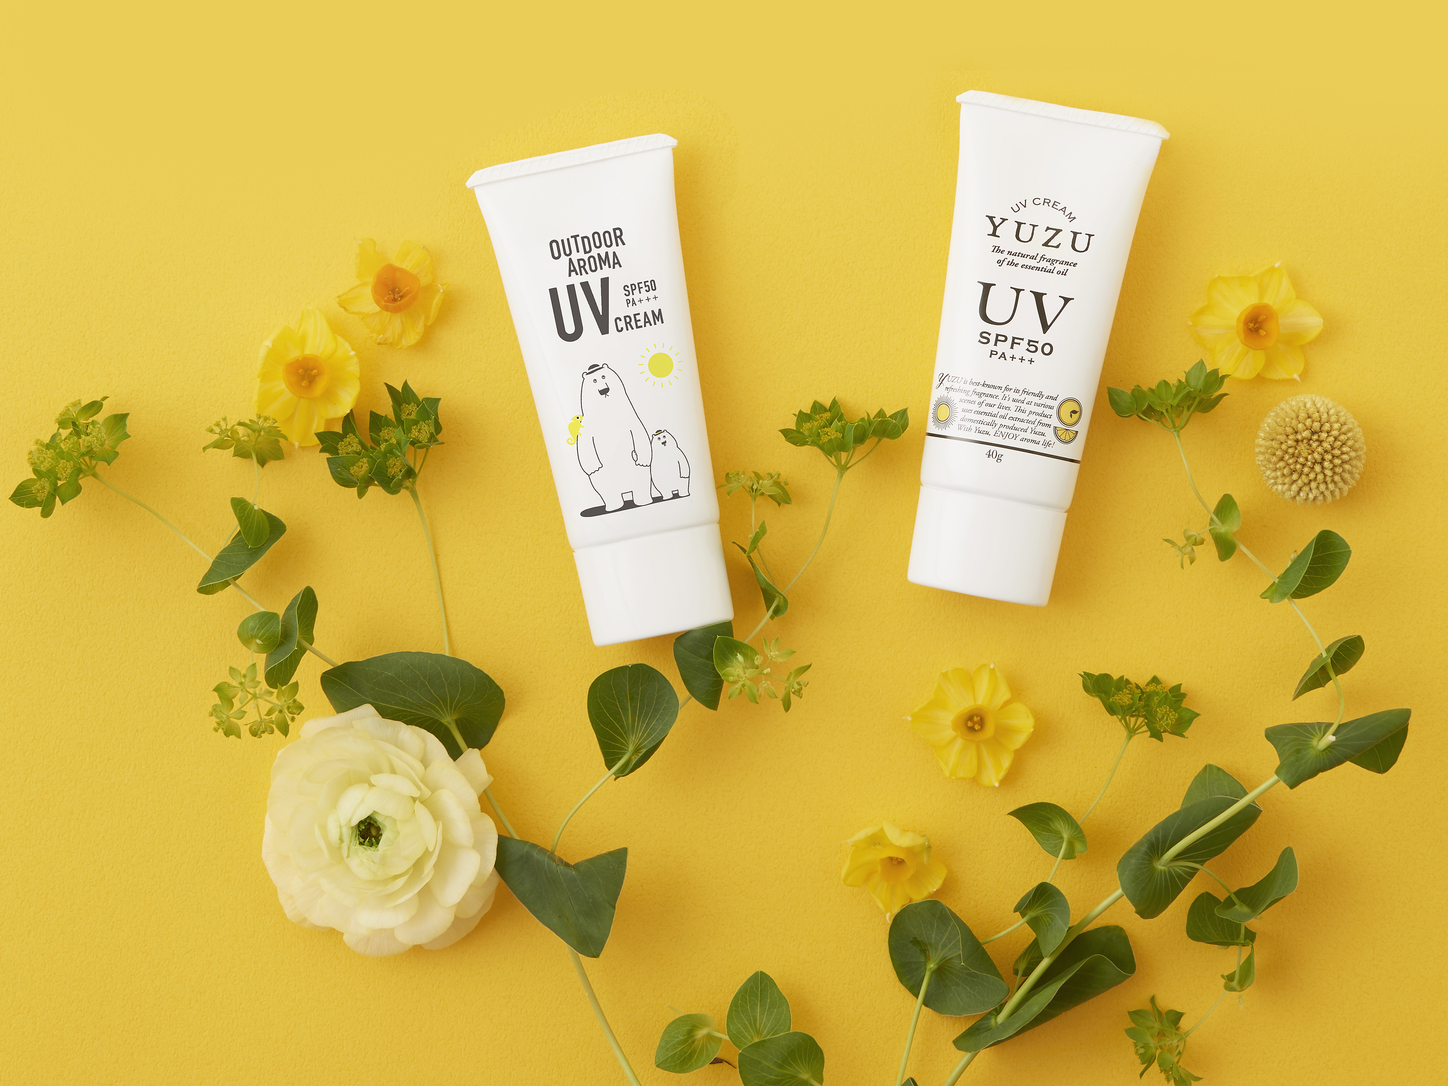 Yuzu beauty news - a fragrance, a foundation, and a fabulous fruit